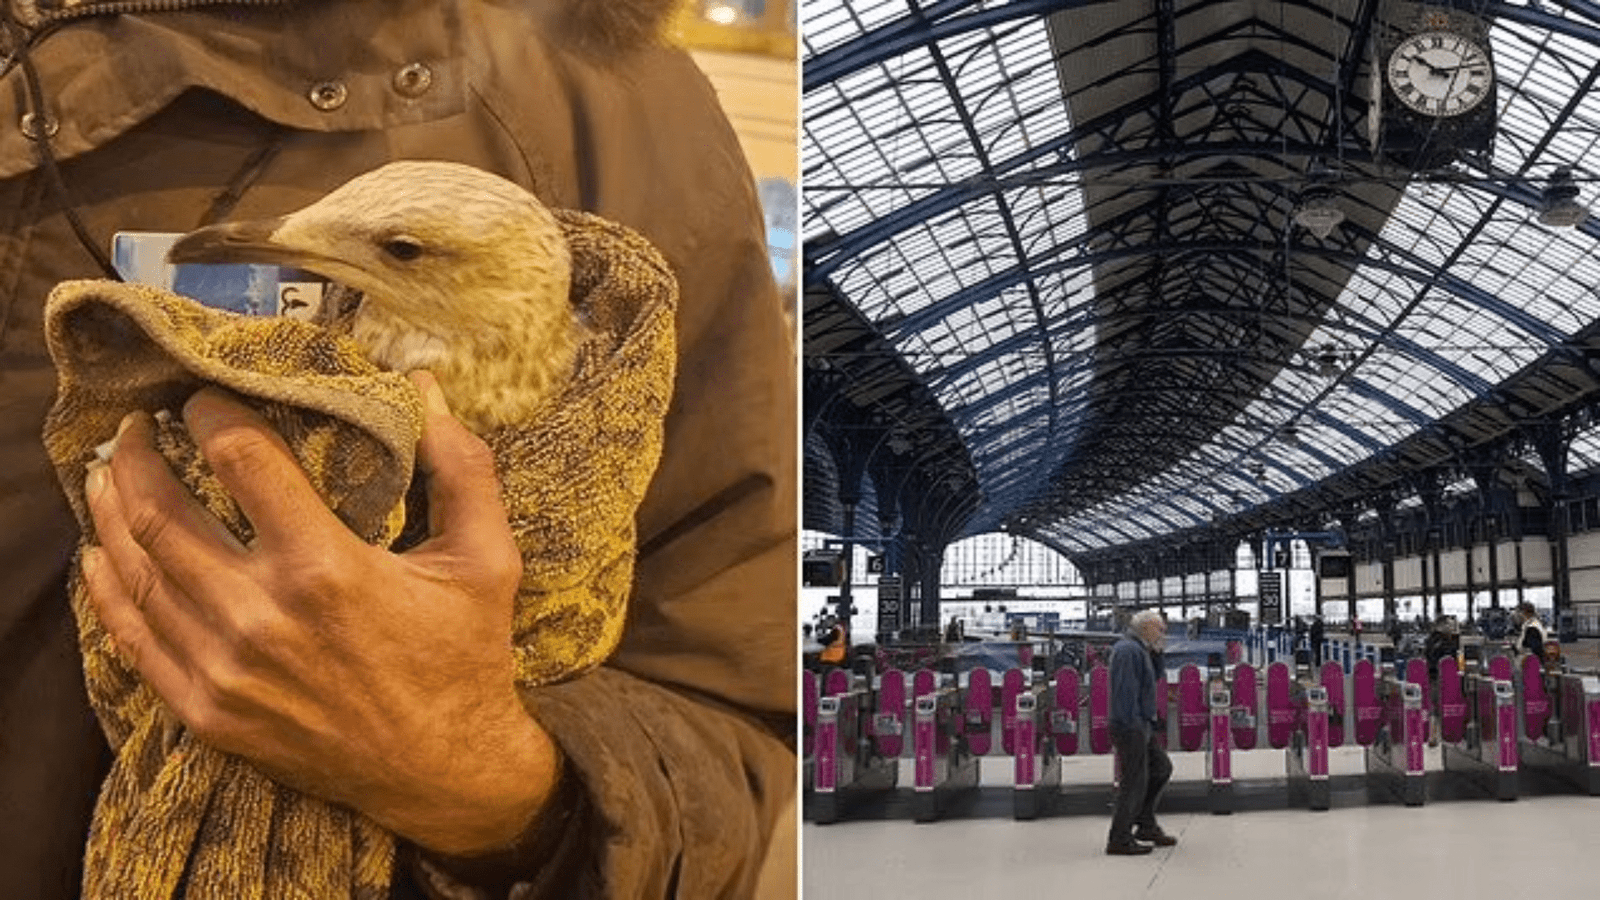 Bird on train tracks disrupts services at Brighton station